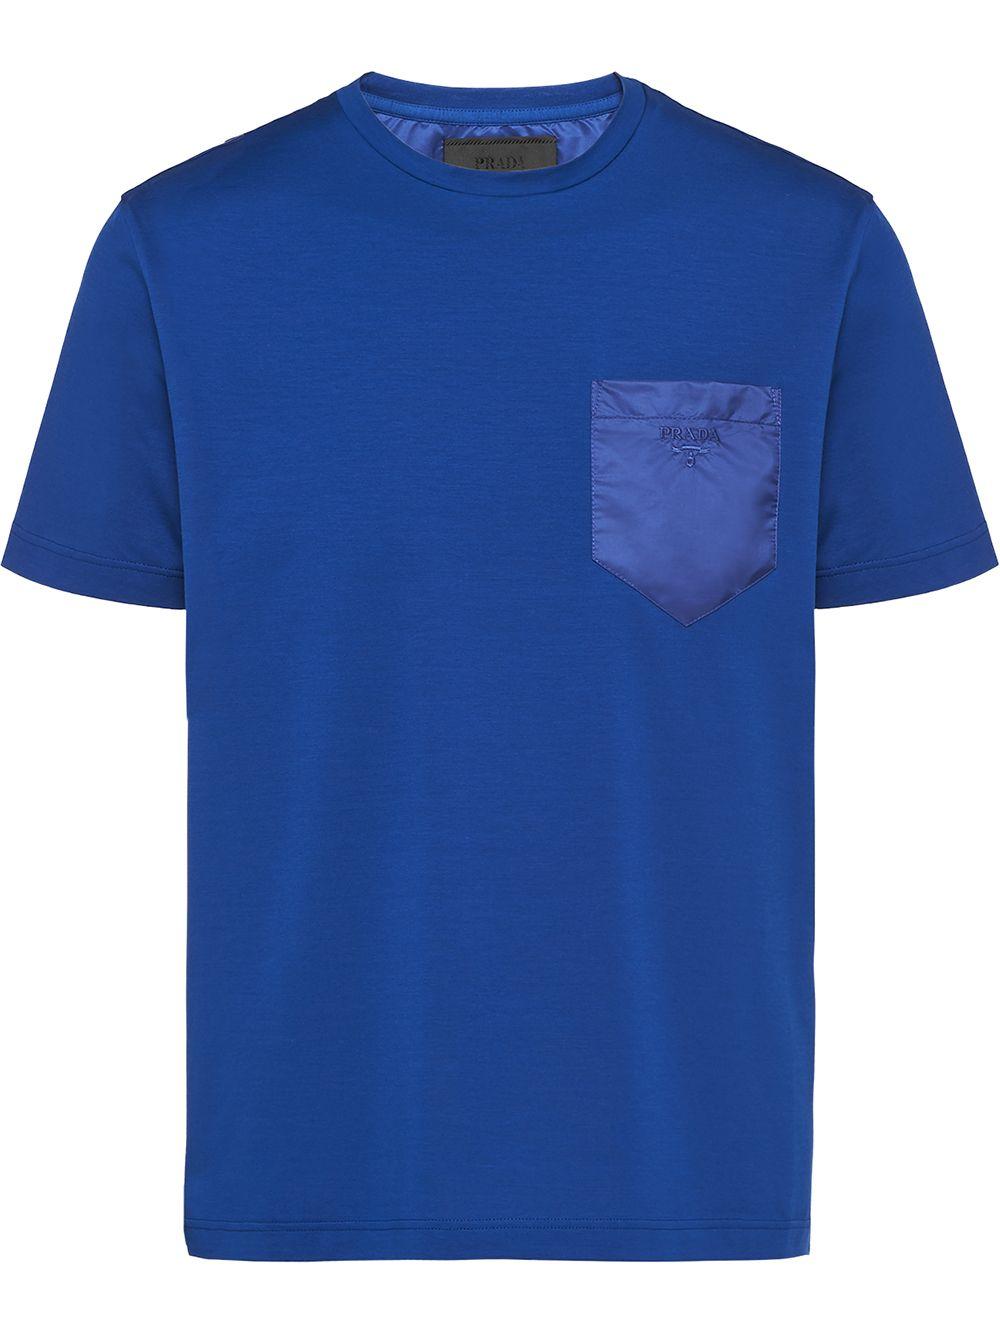 Prada Cotton Patch Pocket T-shirt in Blue for Men - Lyst